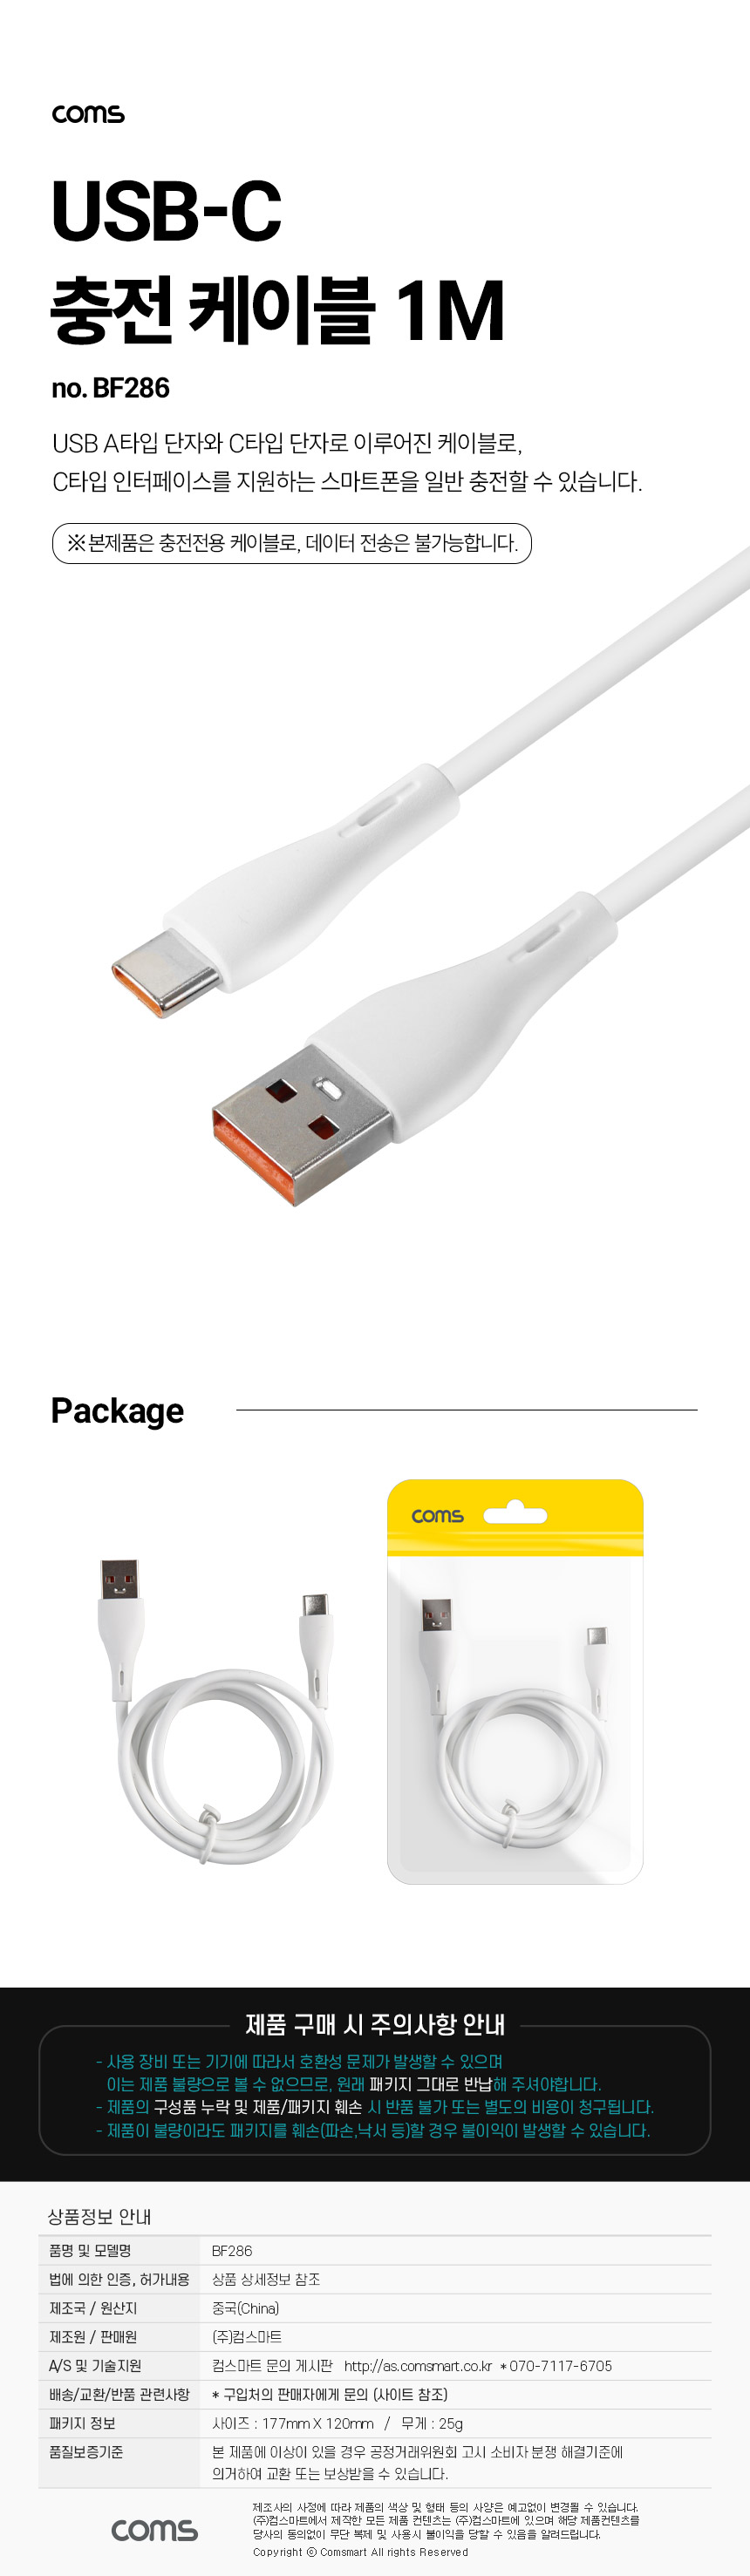 USB C타입 충전전용 케이블 1M USB 3.1